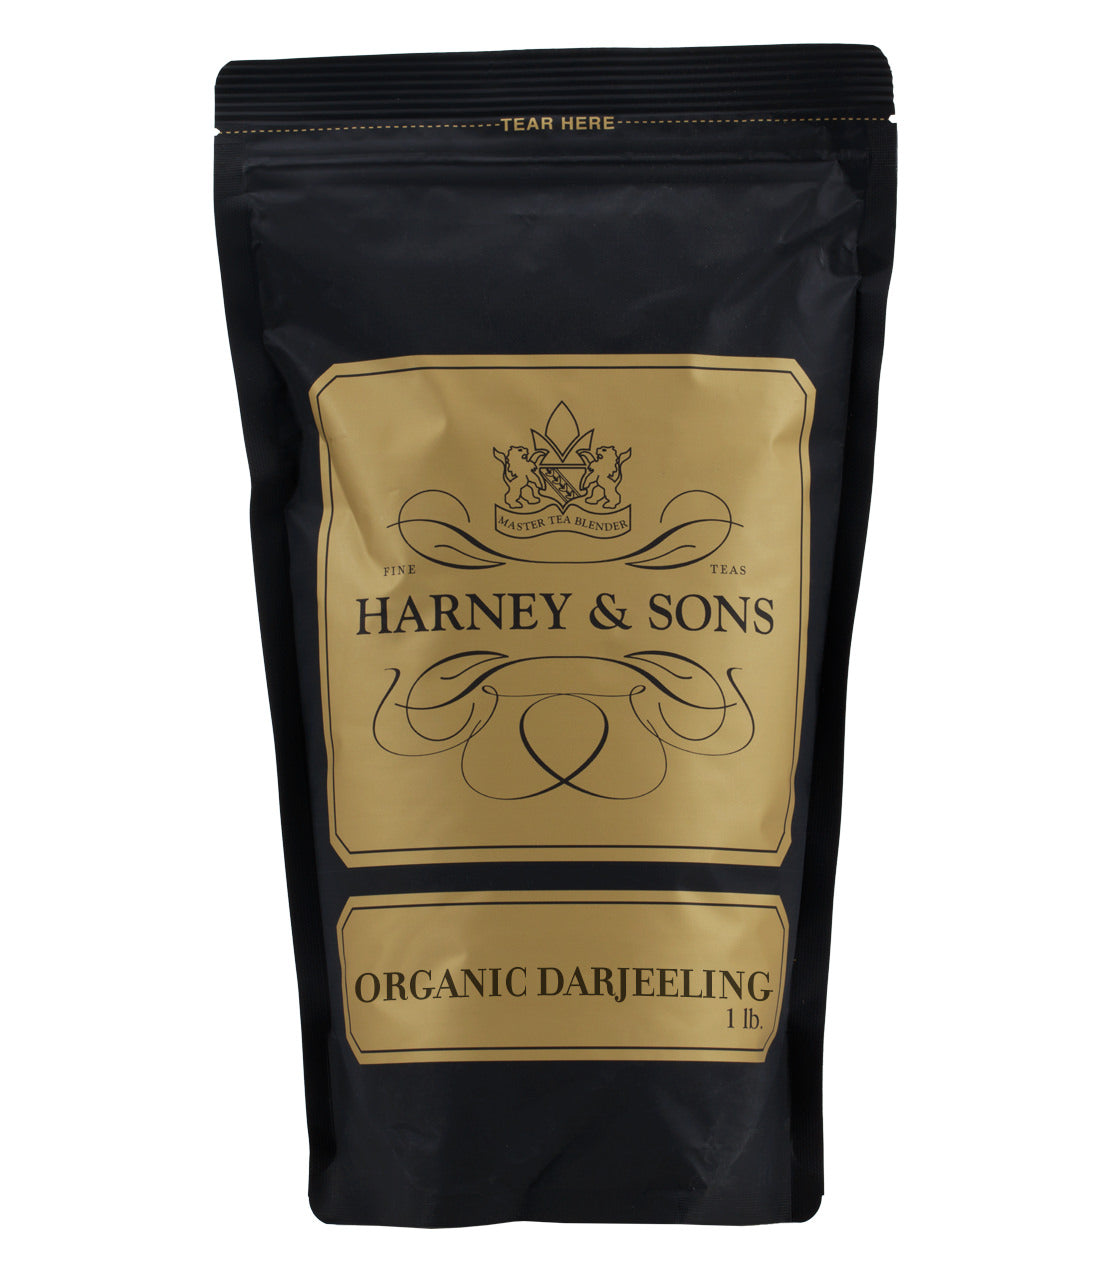 Organic Darjeeling - Loose 1 lb. Bag - Harney & Sons Fine Teas